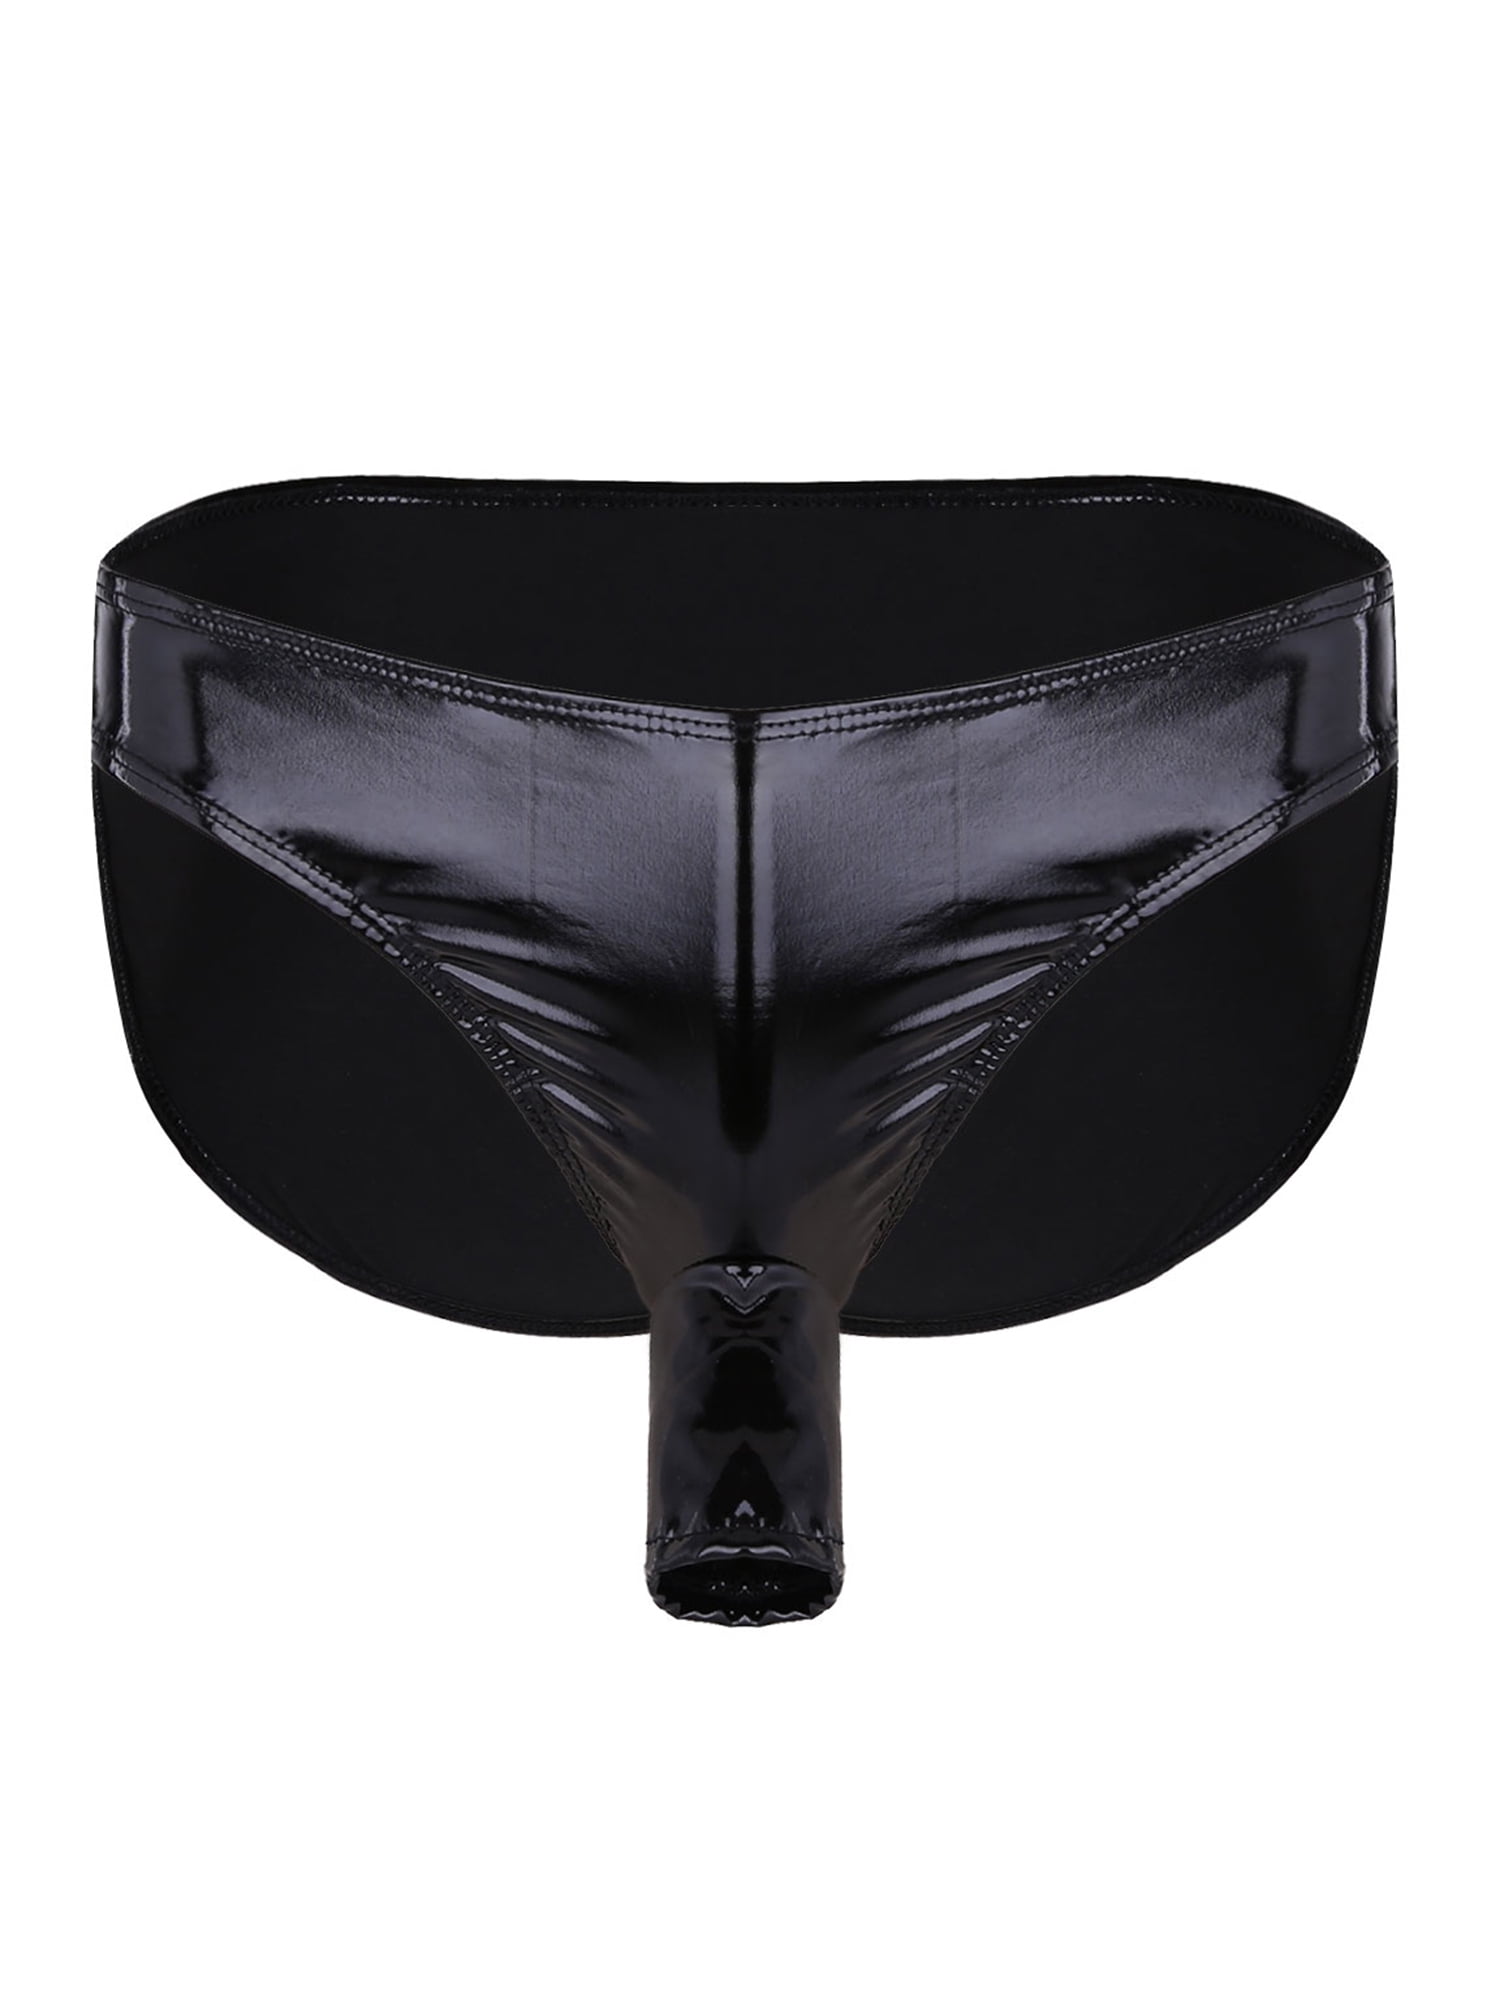 iEFiEL Mens Lingerie Wet Look Patent Leather Briefs Panties - Walmart.com